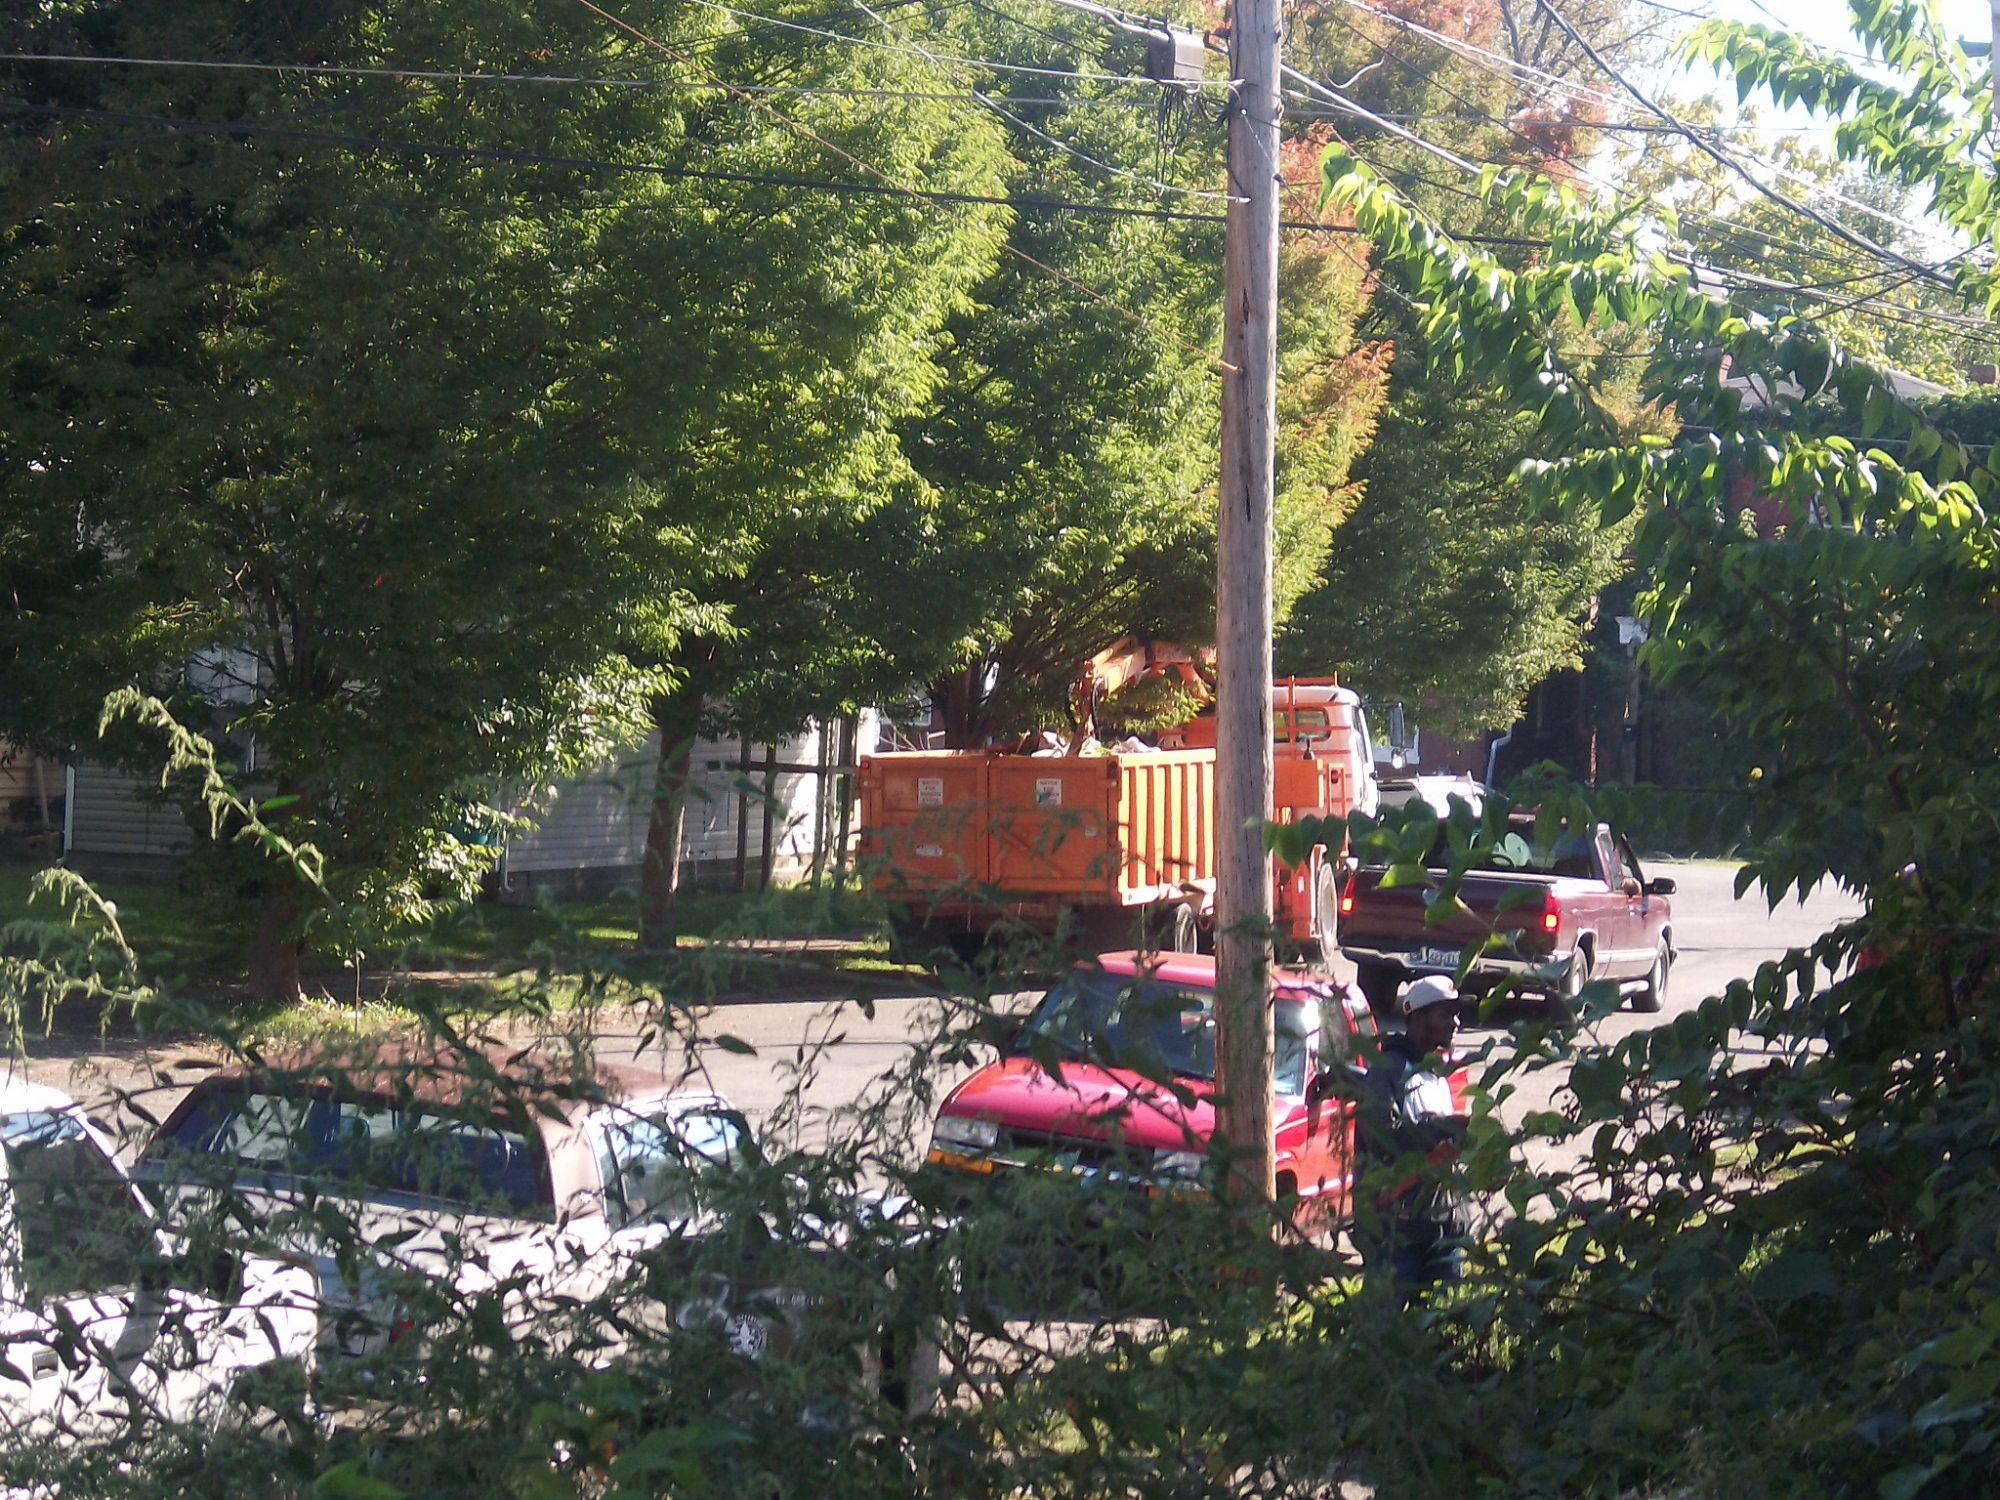 City tree removal trucks